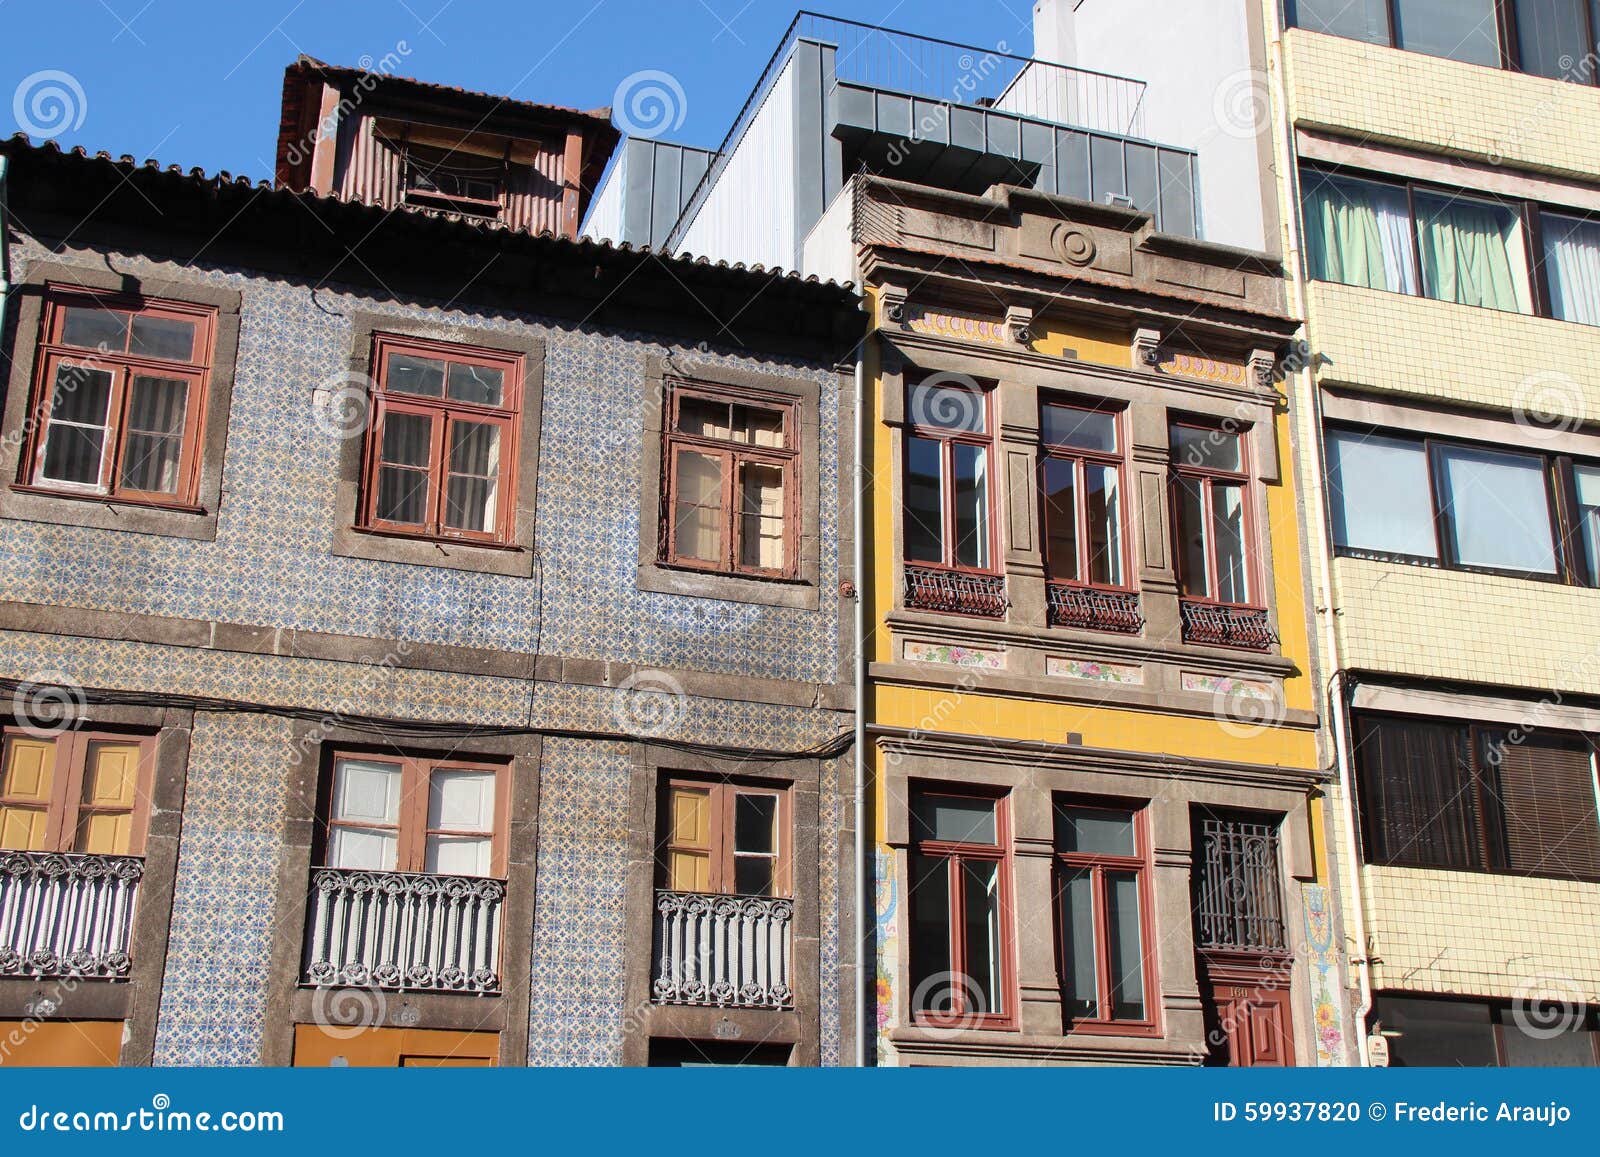 buildings - d. manuel ii street - porto - portugal